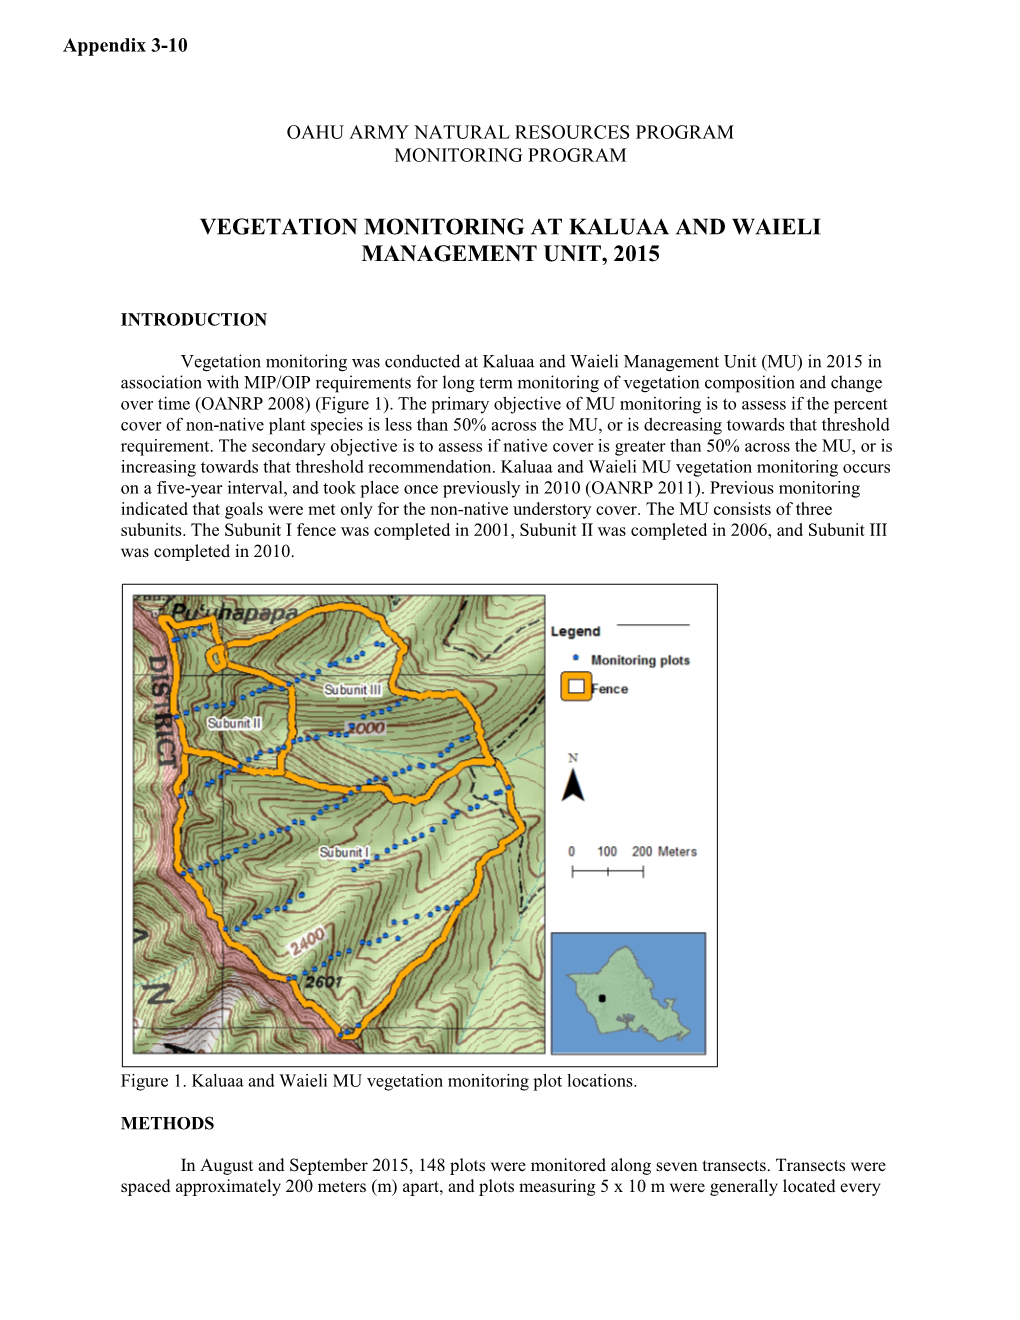 Appendix 3-10 Vegetation Monitoring at Kaluaa and Waieli Management